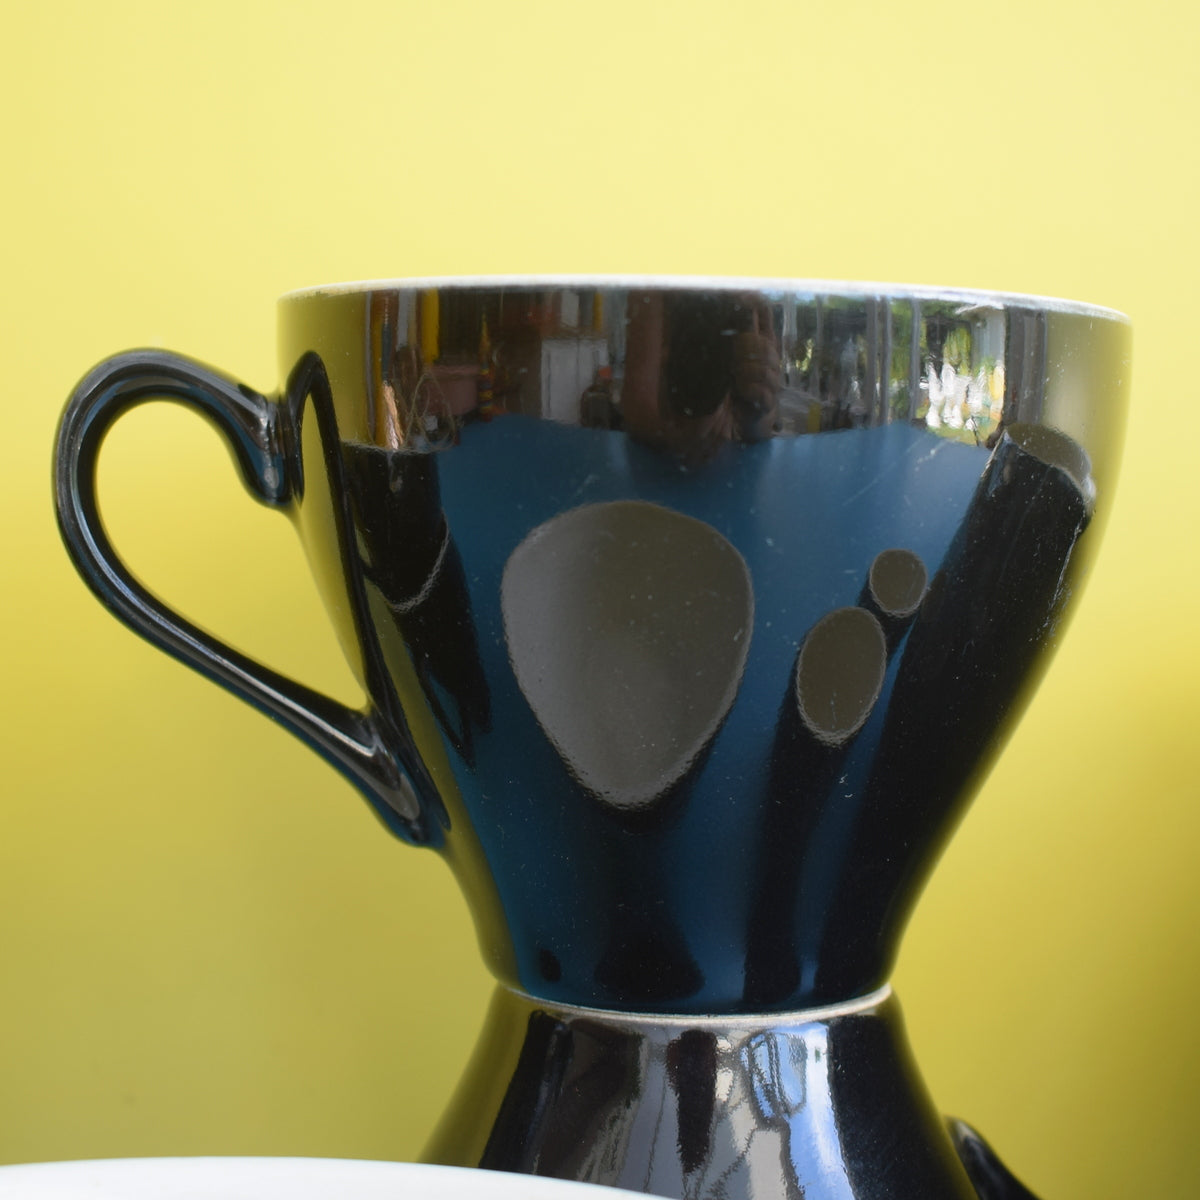 Vintage 1950s Black & White Custard Jug, Egg Cups, Sugar Bowl & Tea Cups - Ridgway Homemaker / Alfred Meakin Parisienne